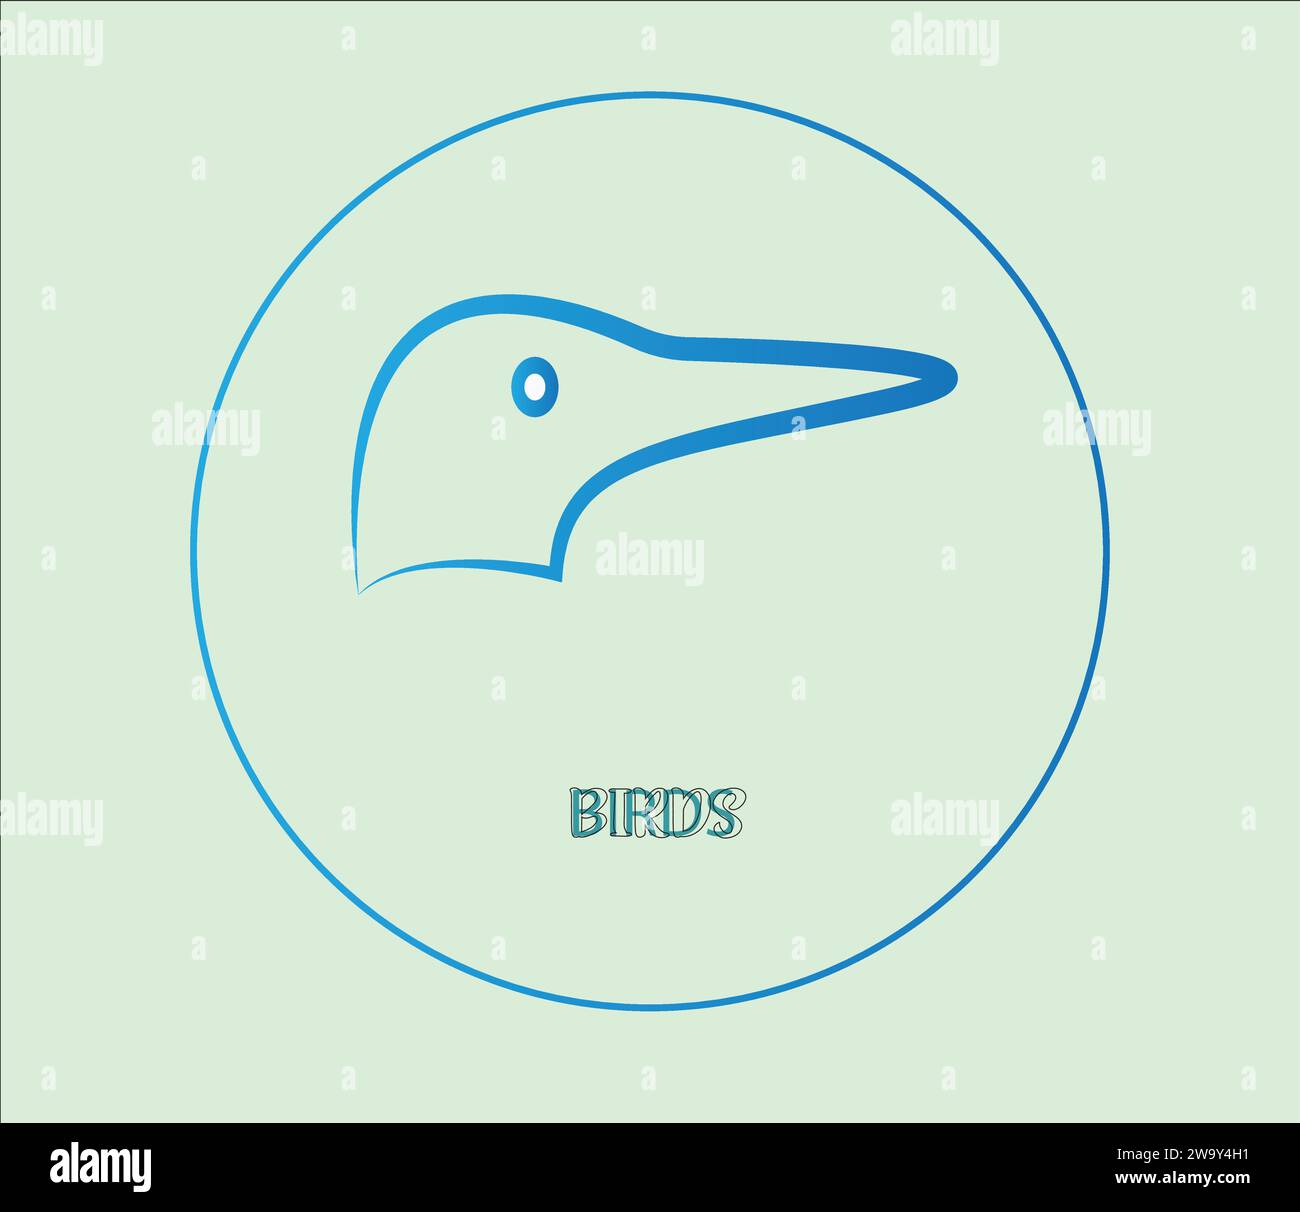 Bird logo elegant and modern design. Stock Vector